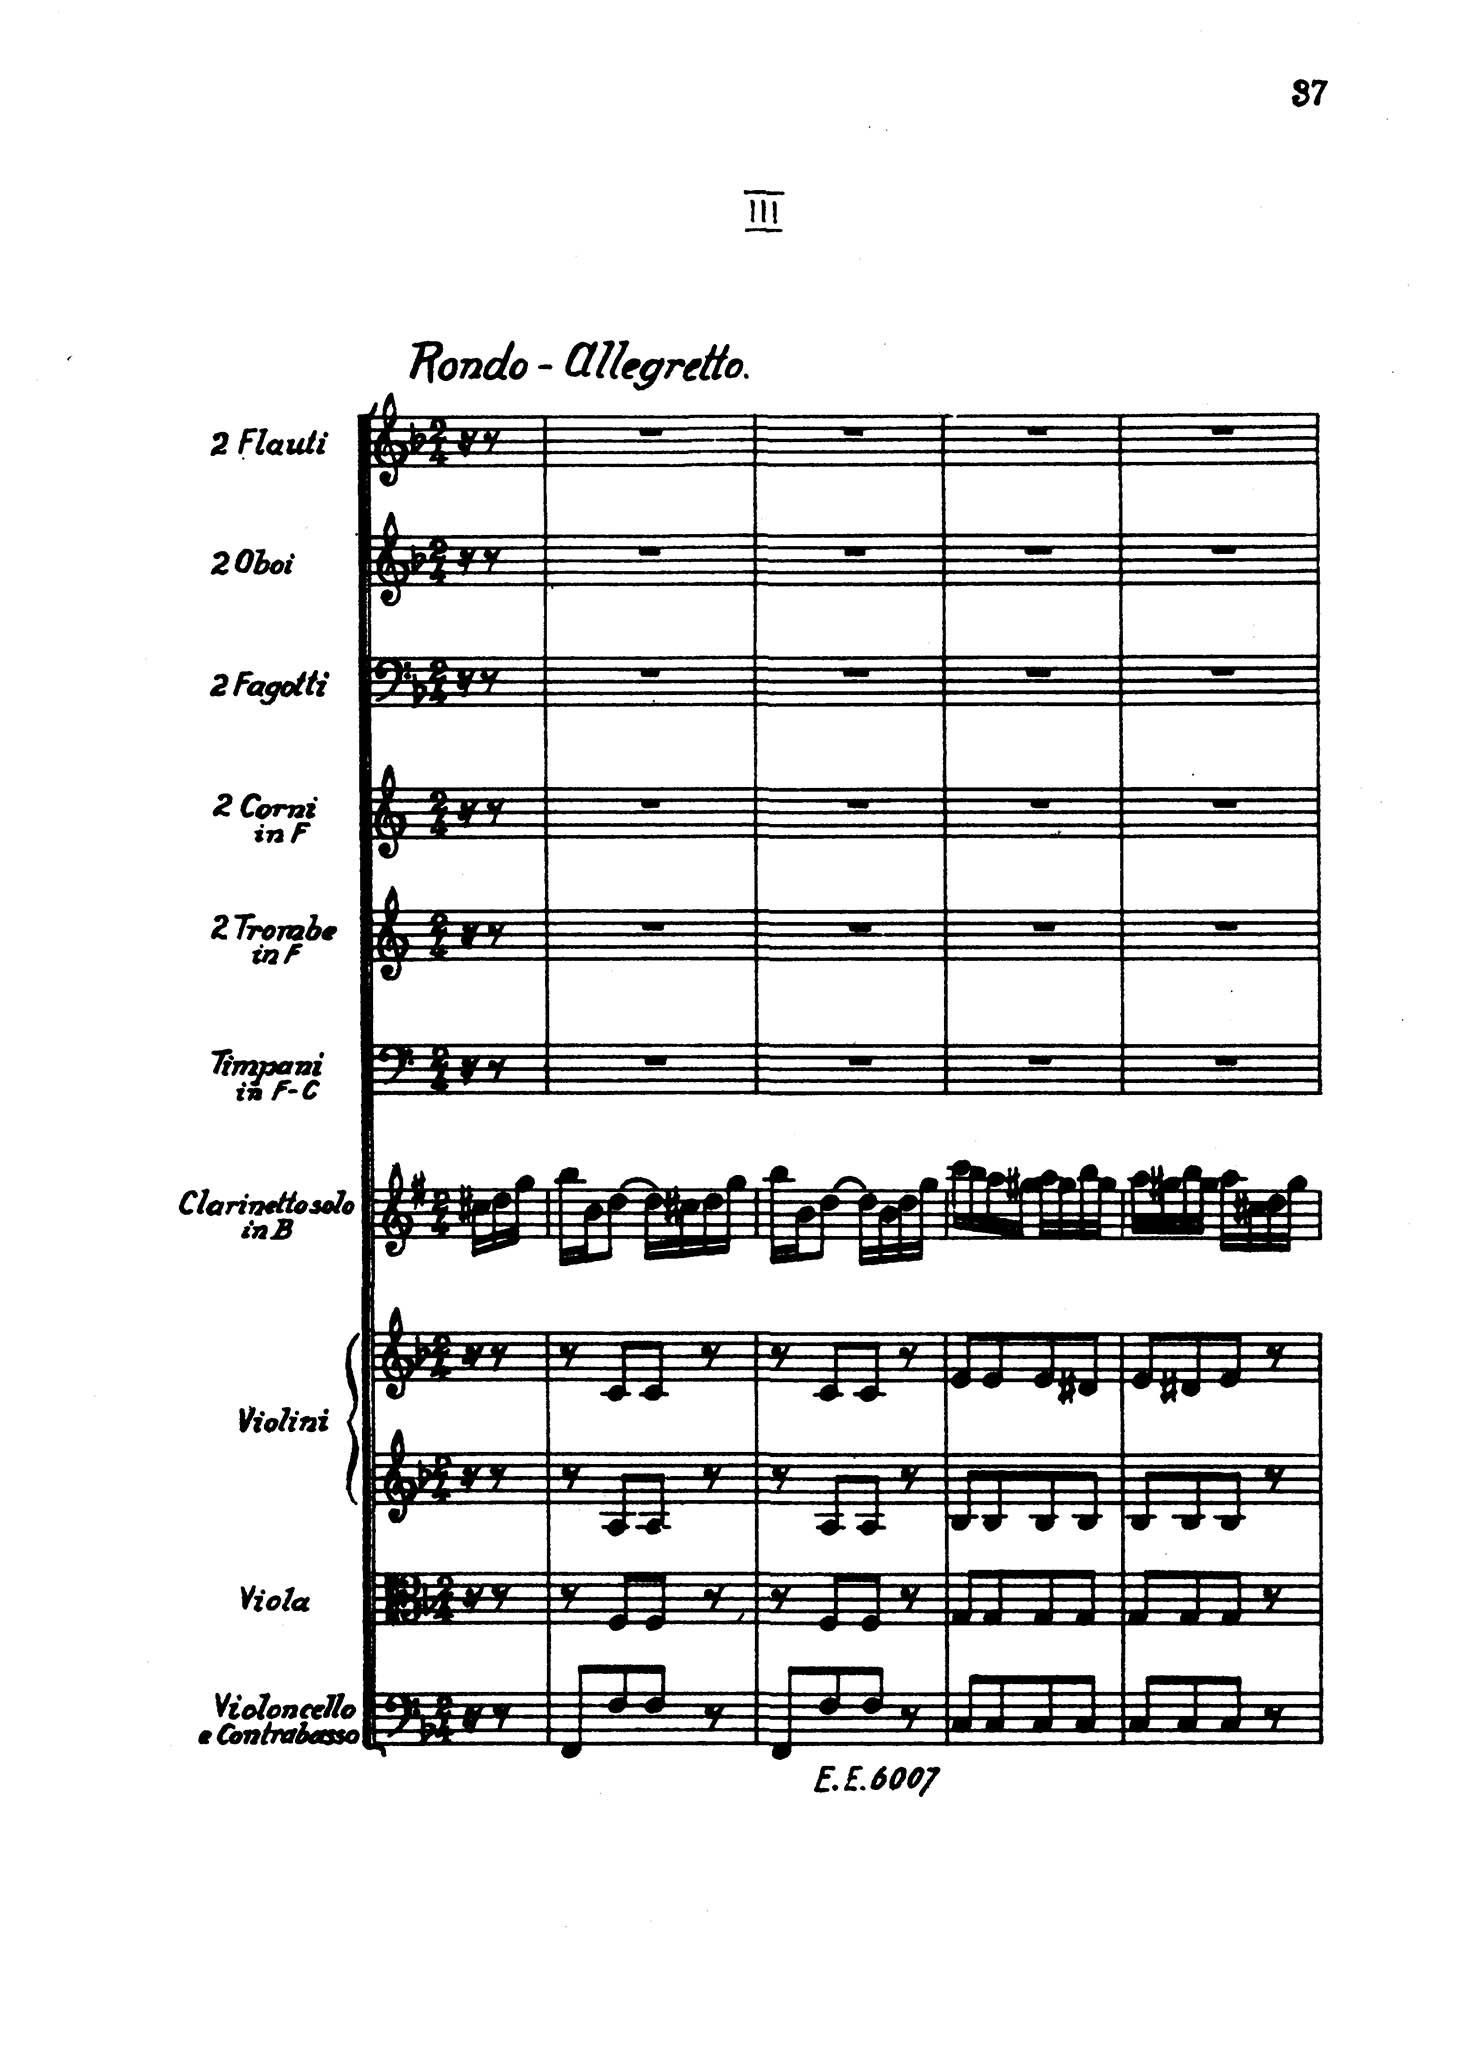 Clarinet Concerto No. 1 in F Minor, Op. 73 - Movement 3